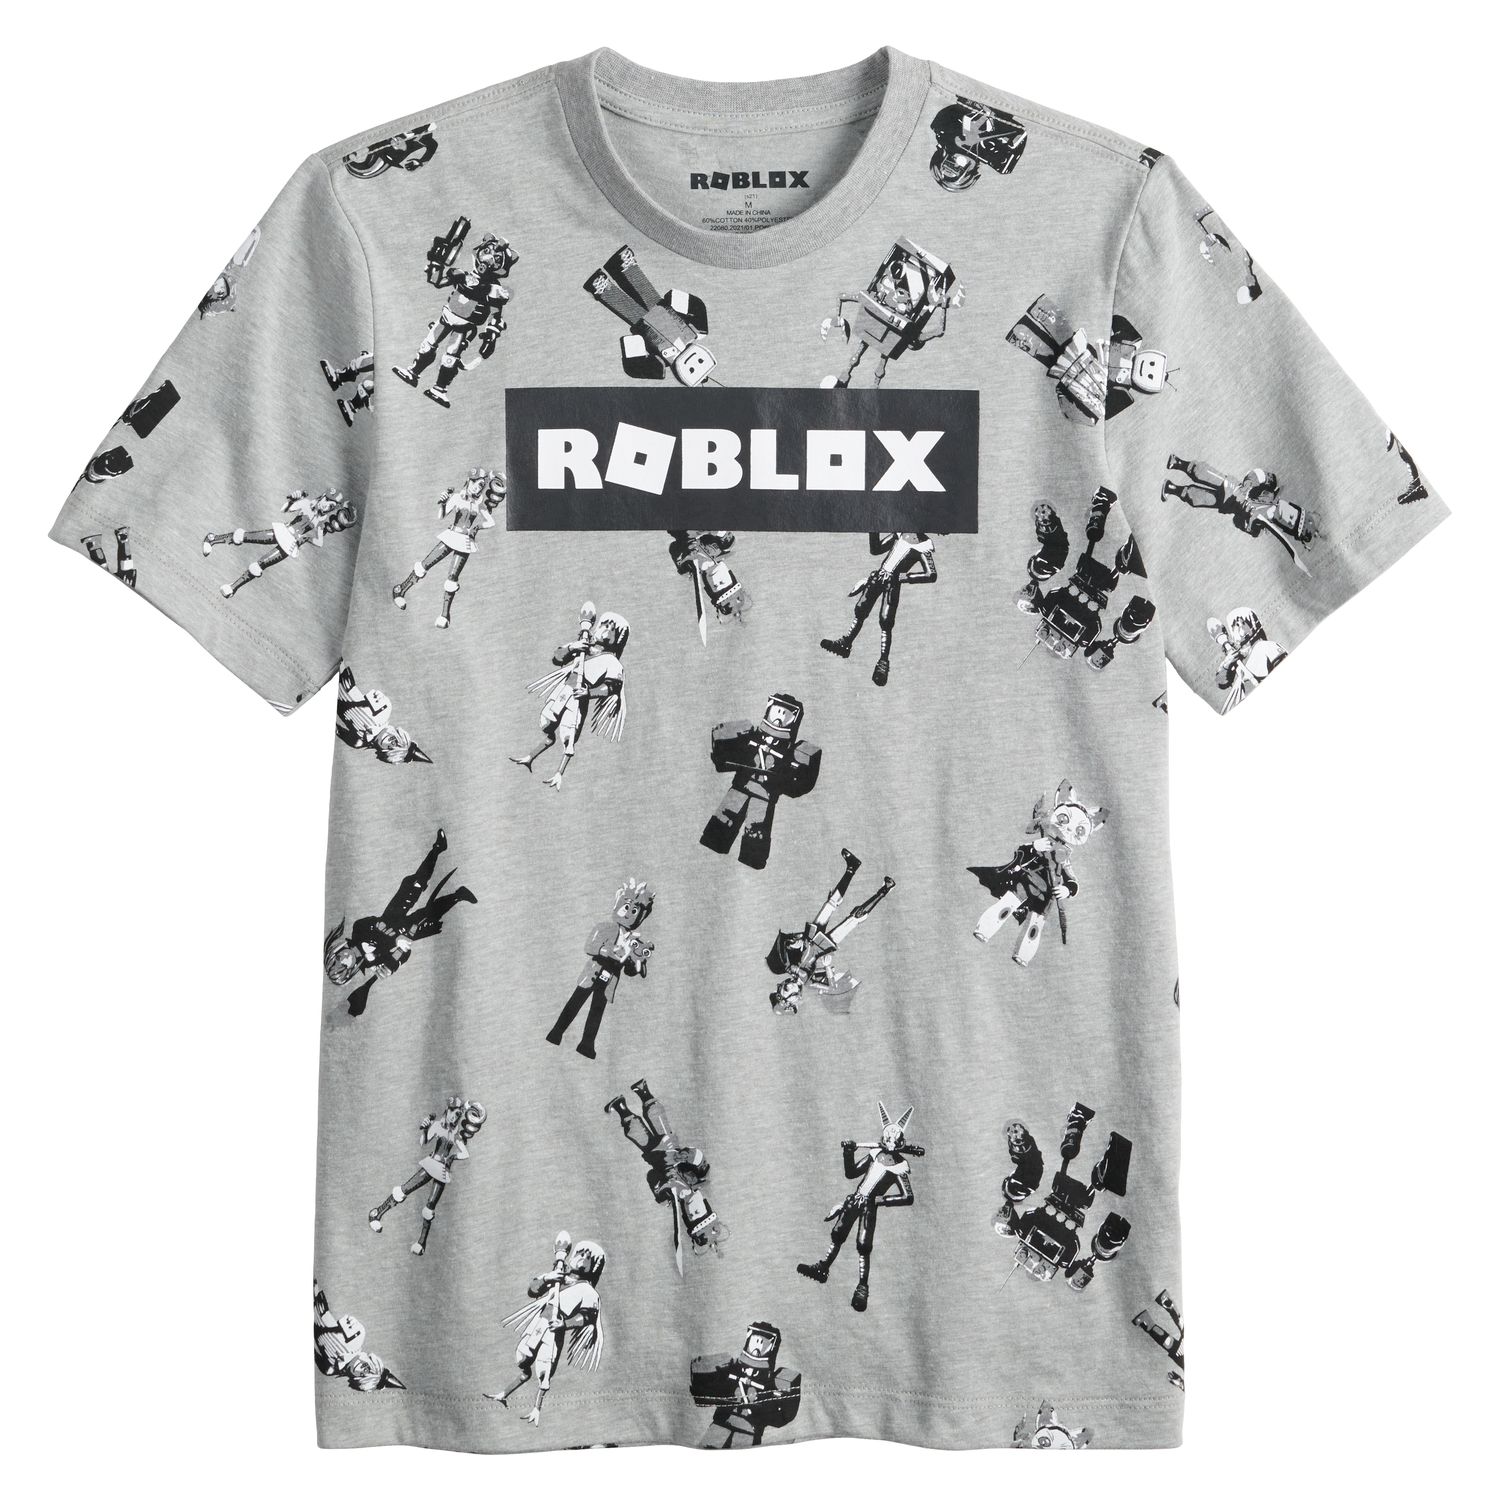 Buy Baby Yoda T Shirt Roblox Off 59 - grid roblox shirt